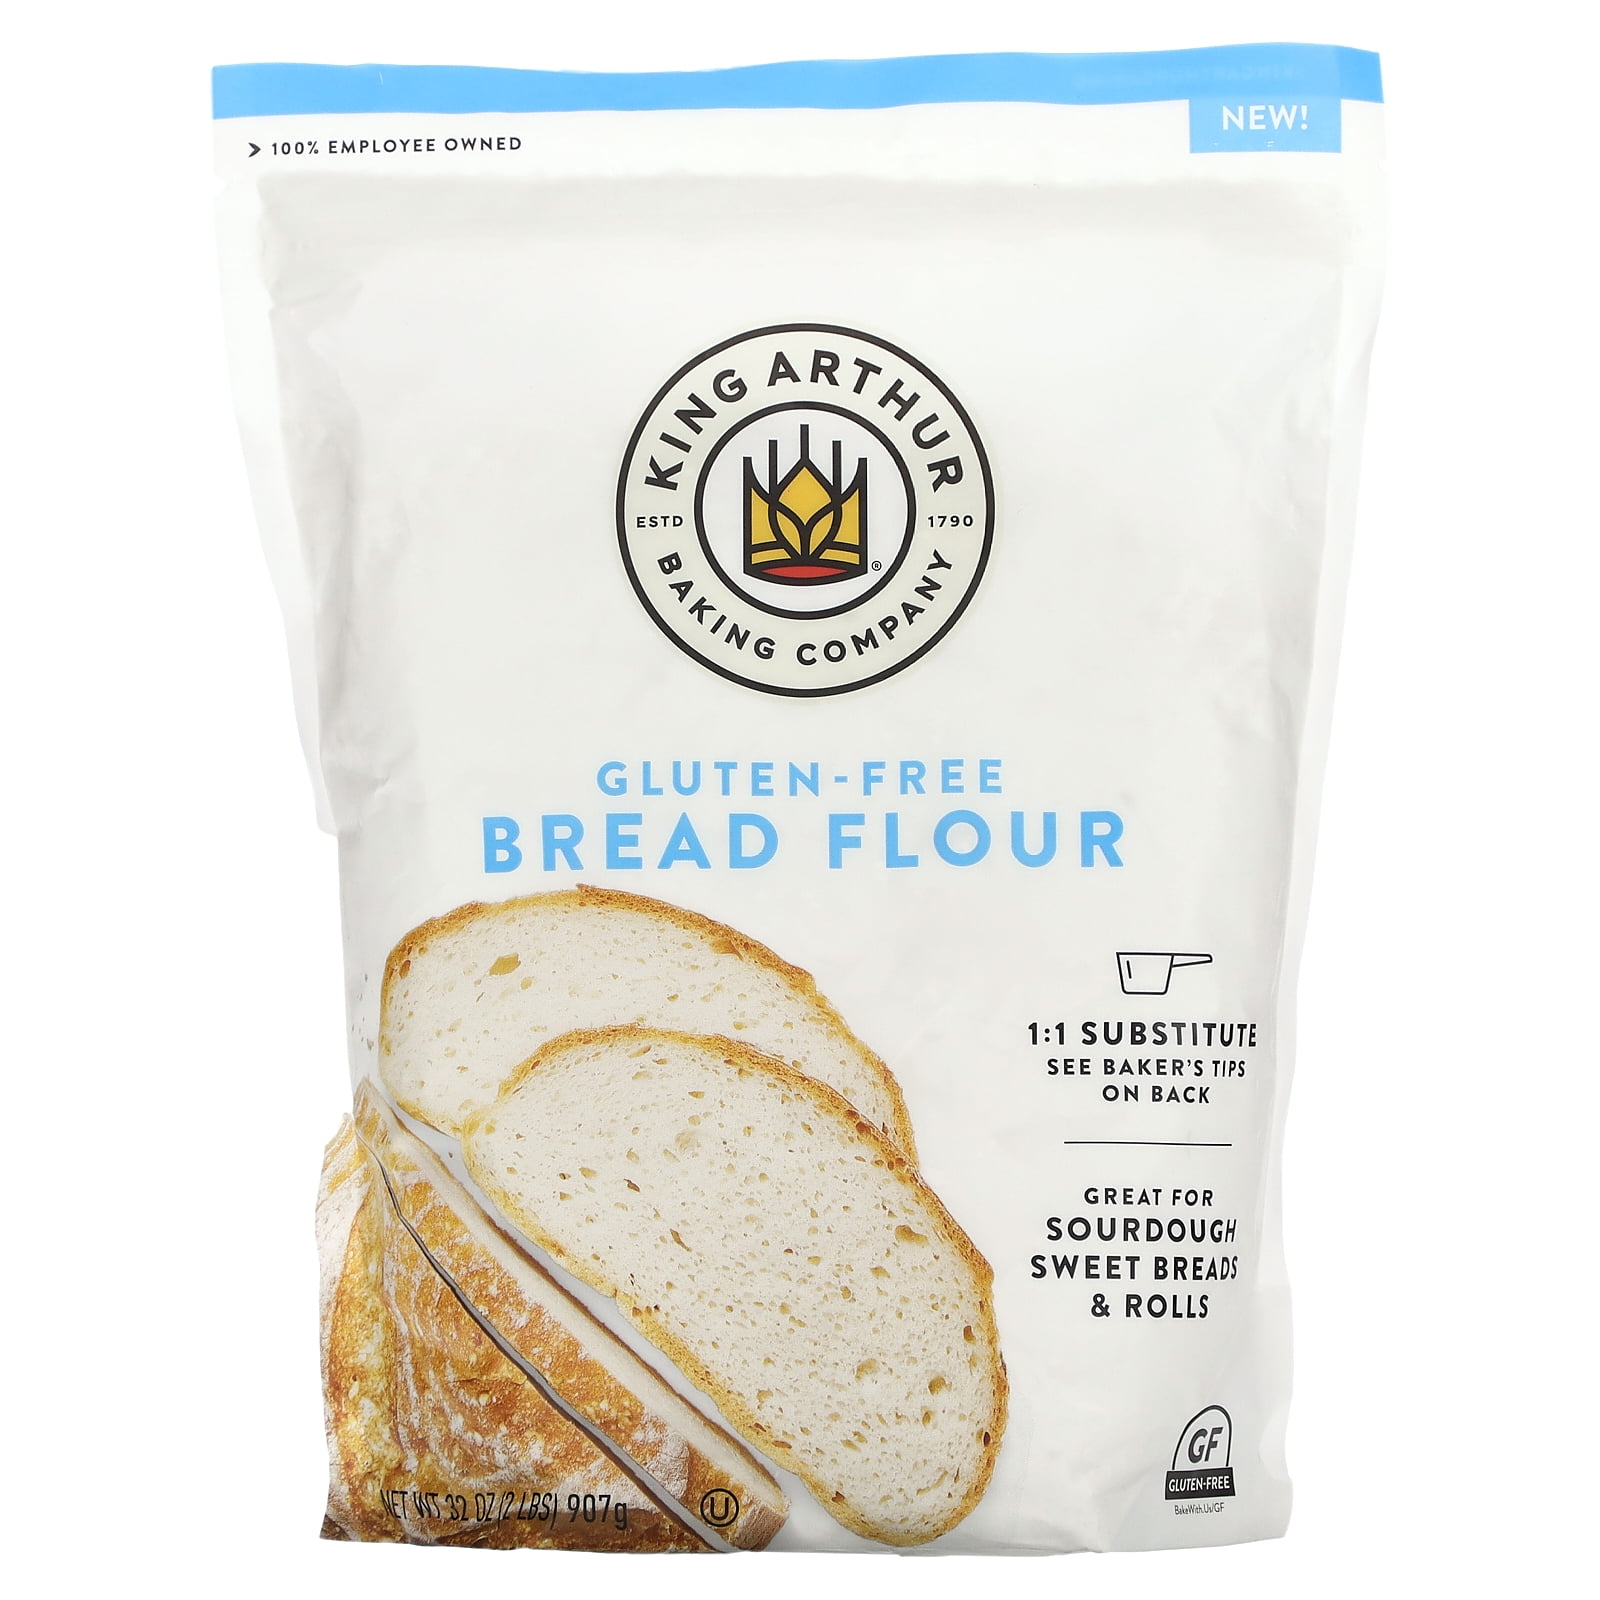 King Arthur Baking Company launches gluten-free bread flour